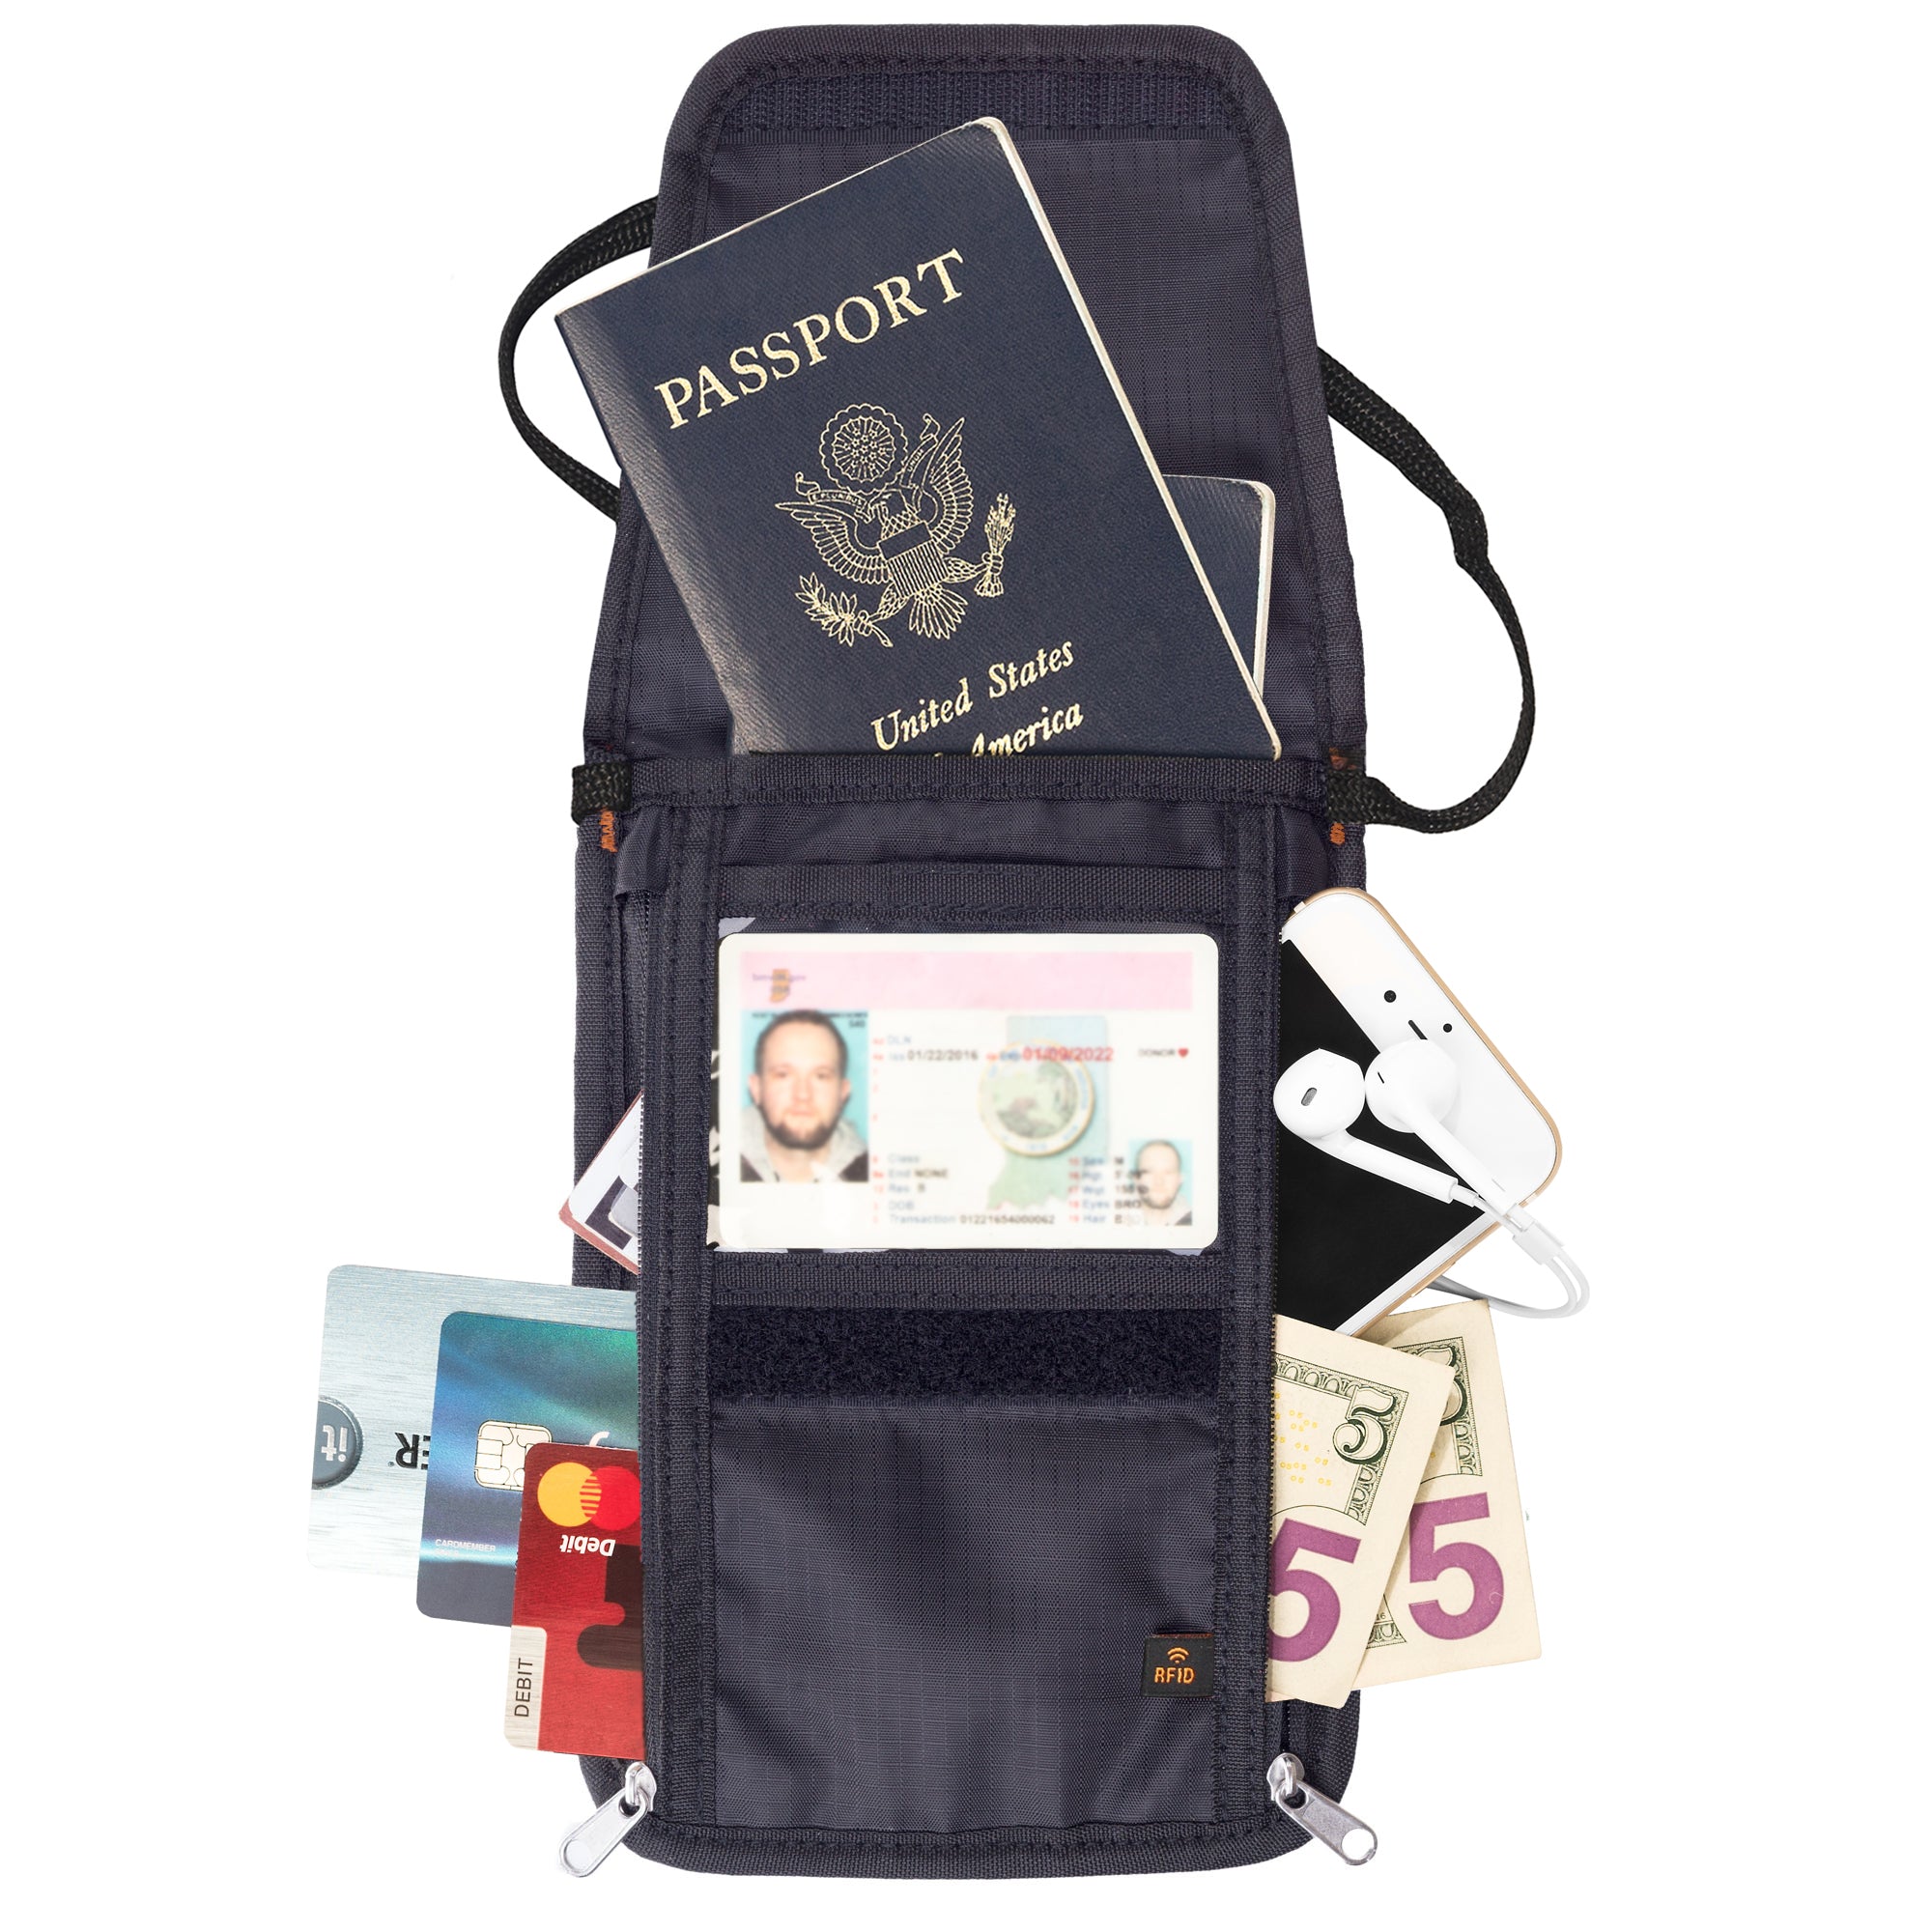 MoKo Travel Money Belt, Passport Holder RFID Blocking Travel Wallet, Anti-Theft Bag to Protect Cash Credit Cards Travel Documents, Black, Adult Unisex